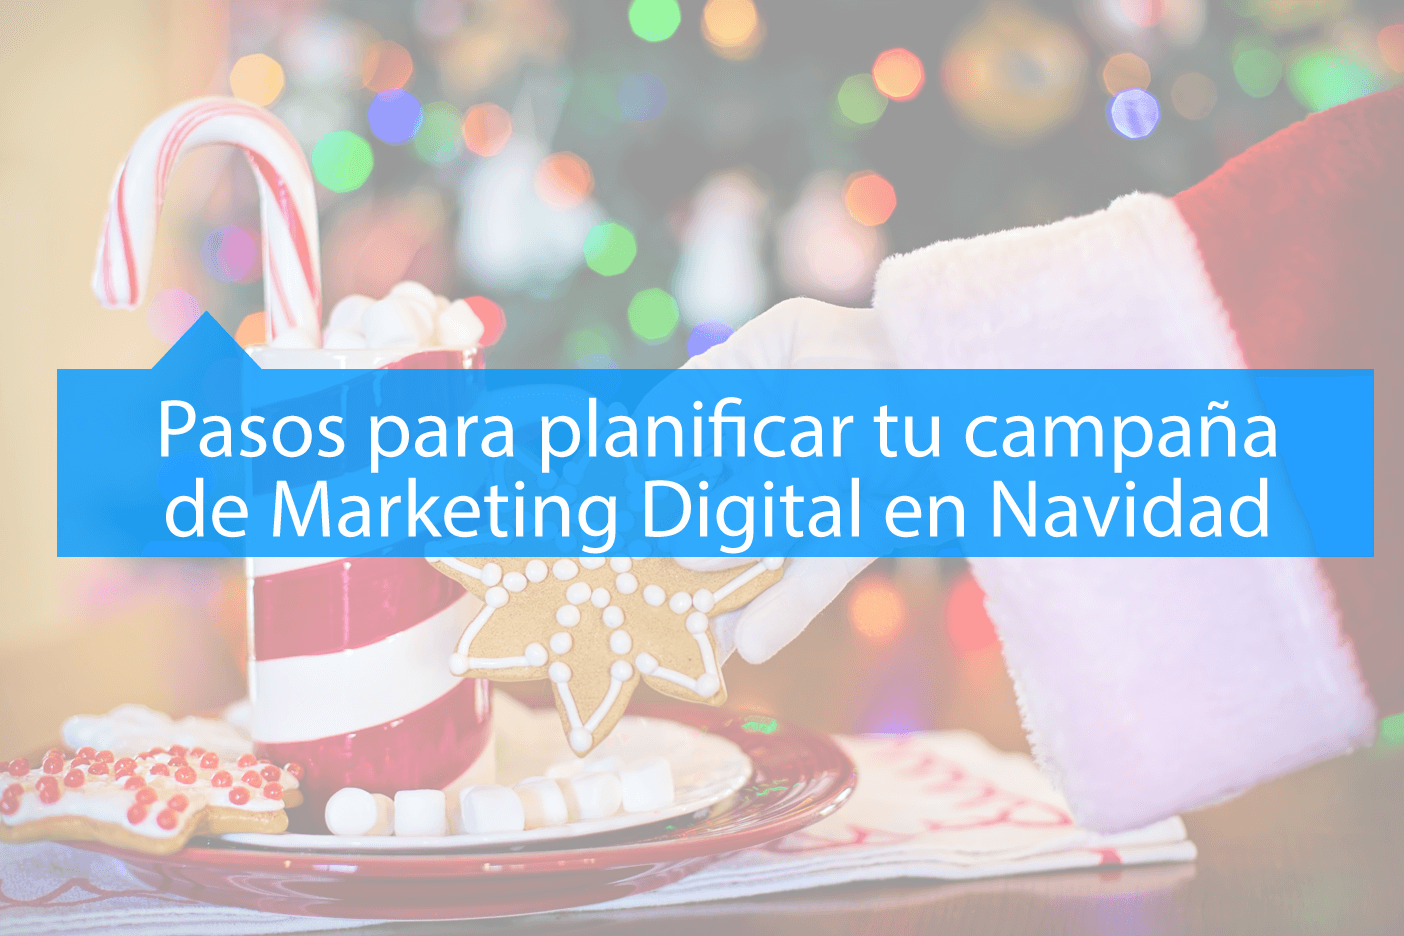 Marketing Digital de Navidad